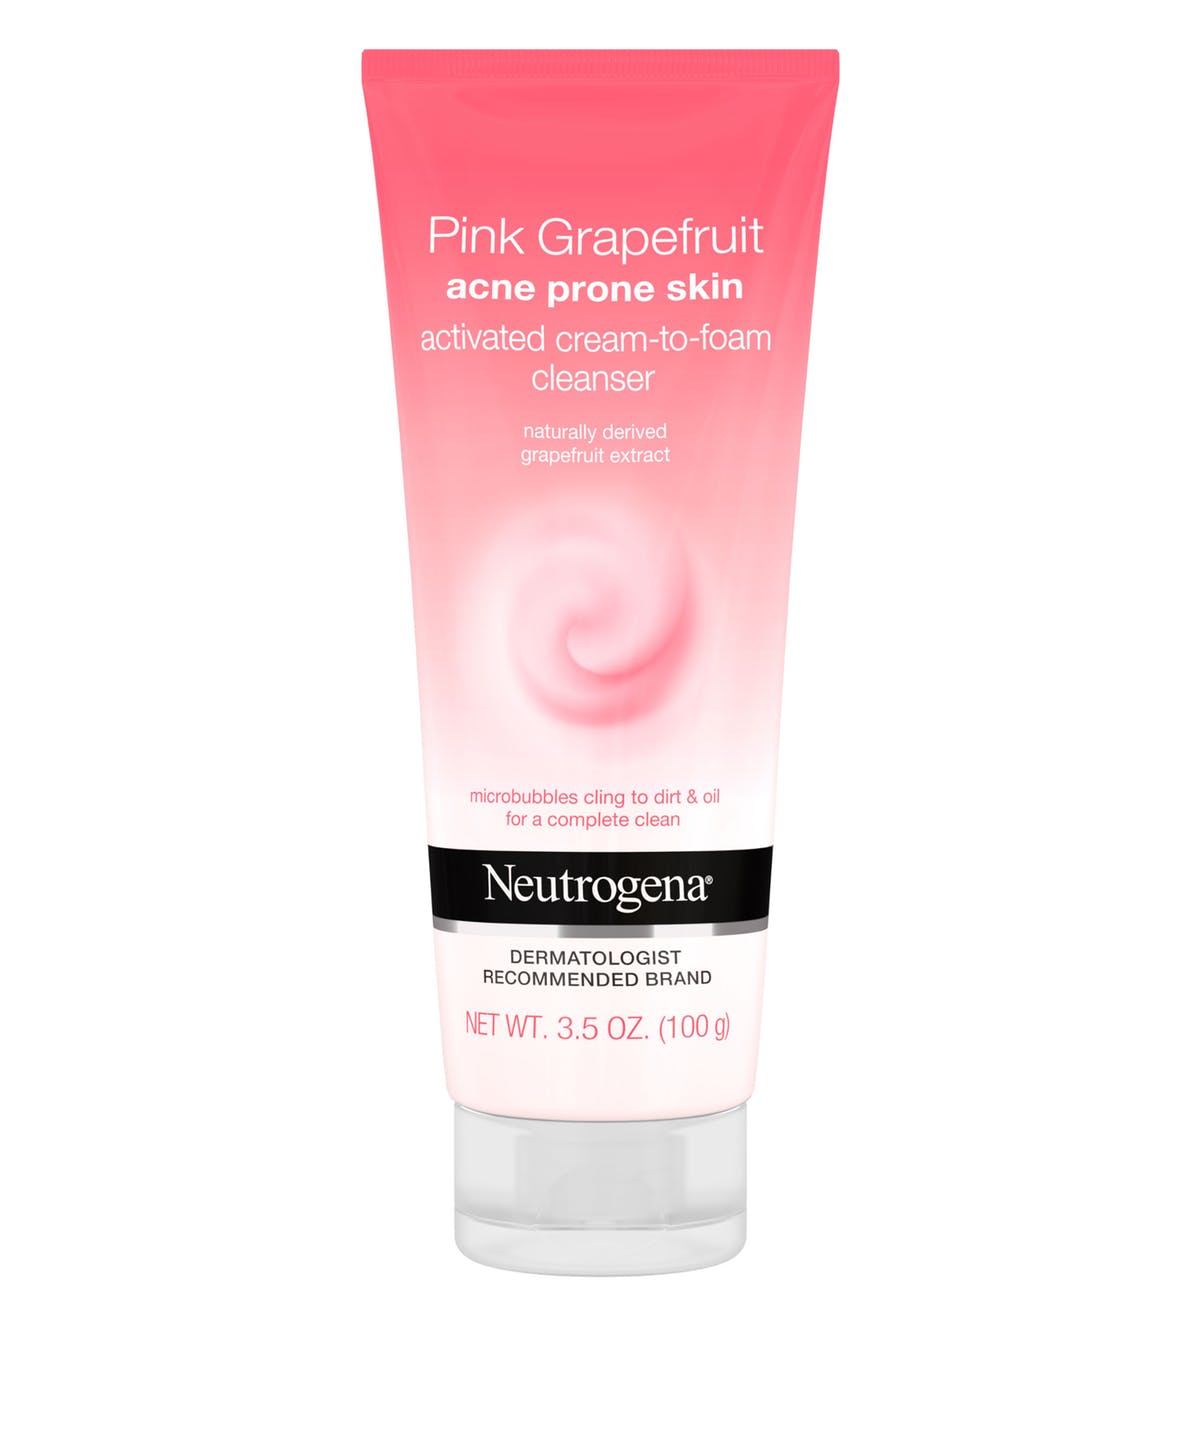 Neutrogena Pink Grapefruit Acne Prone Skin Activated Cream-to-Foam Cleanser